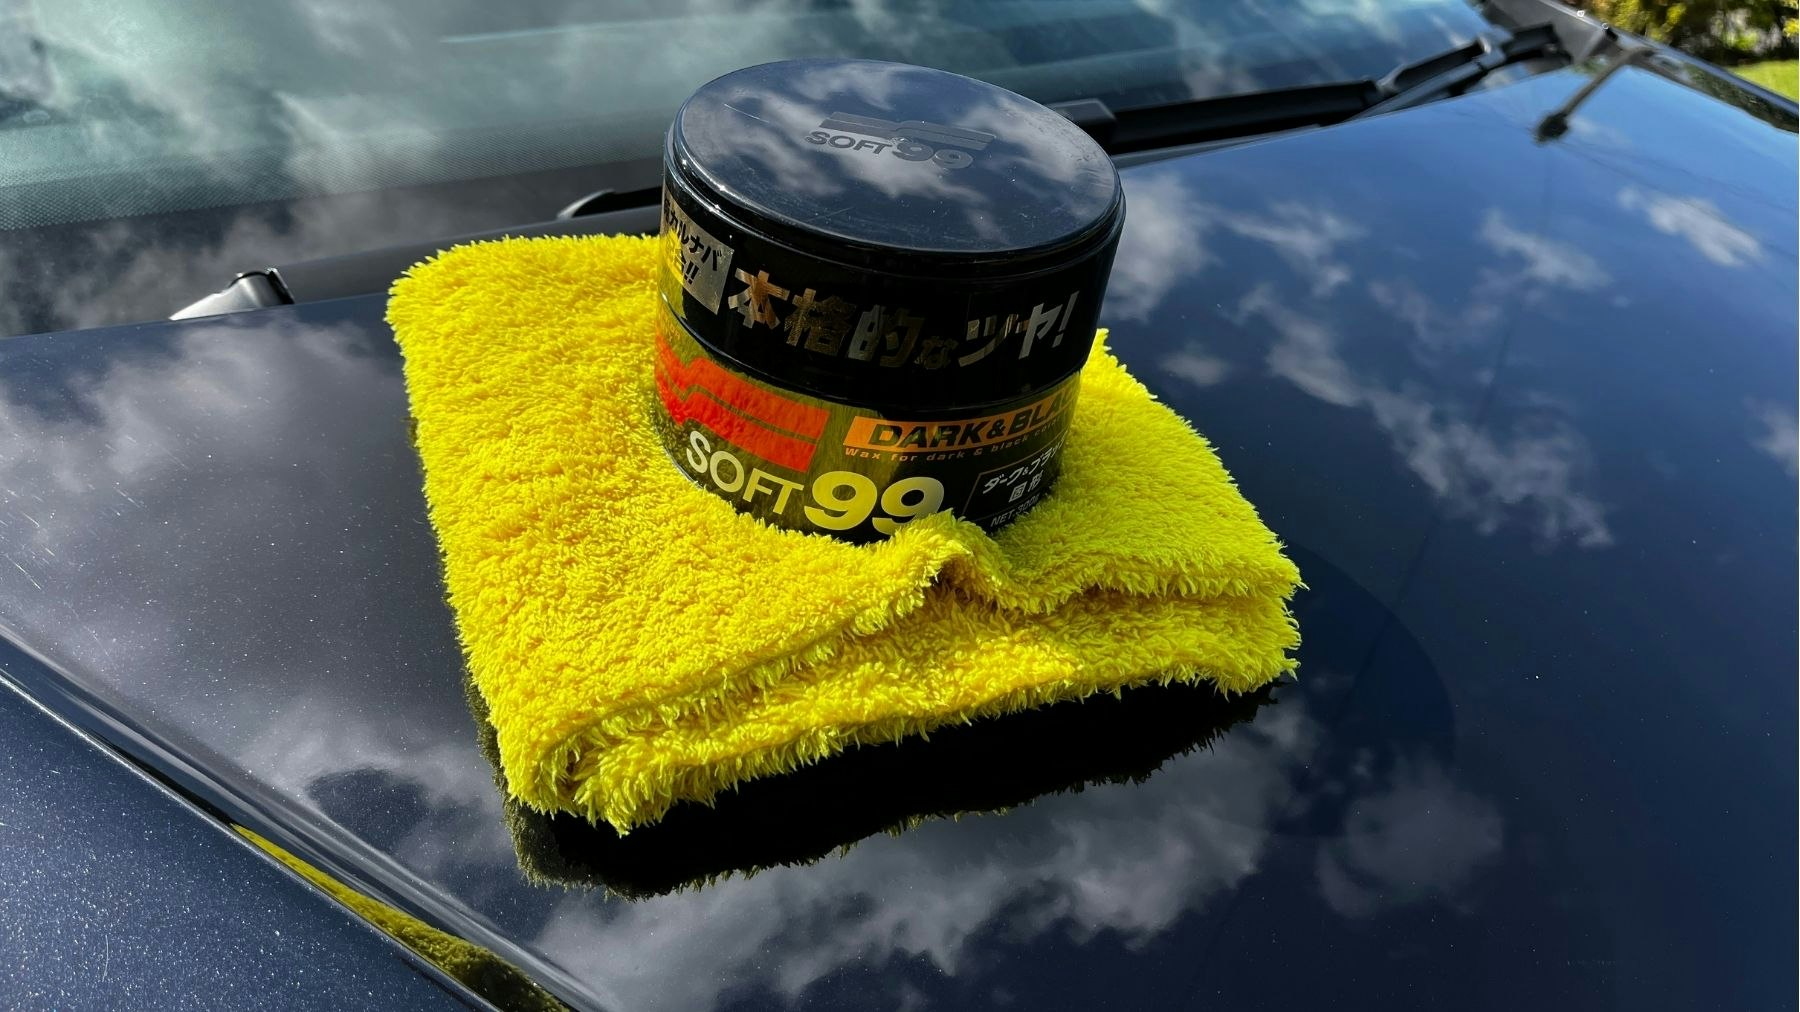 Dark & Black Soft99 Wax, hard car wax, 300 g - Soft99